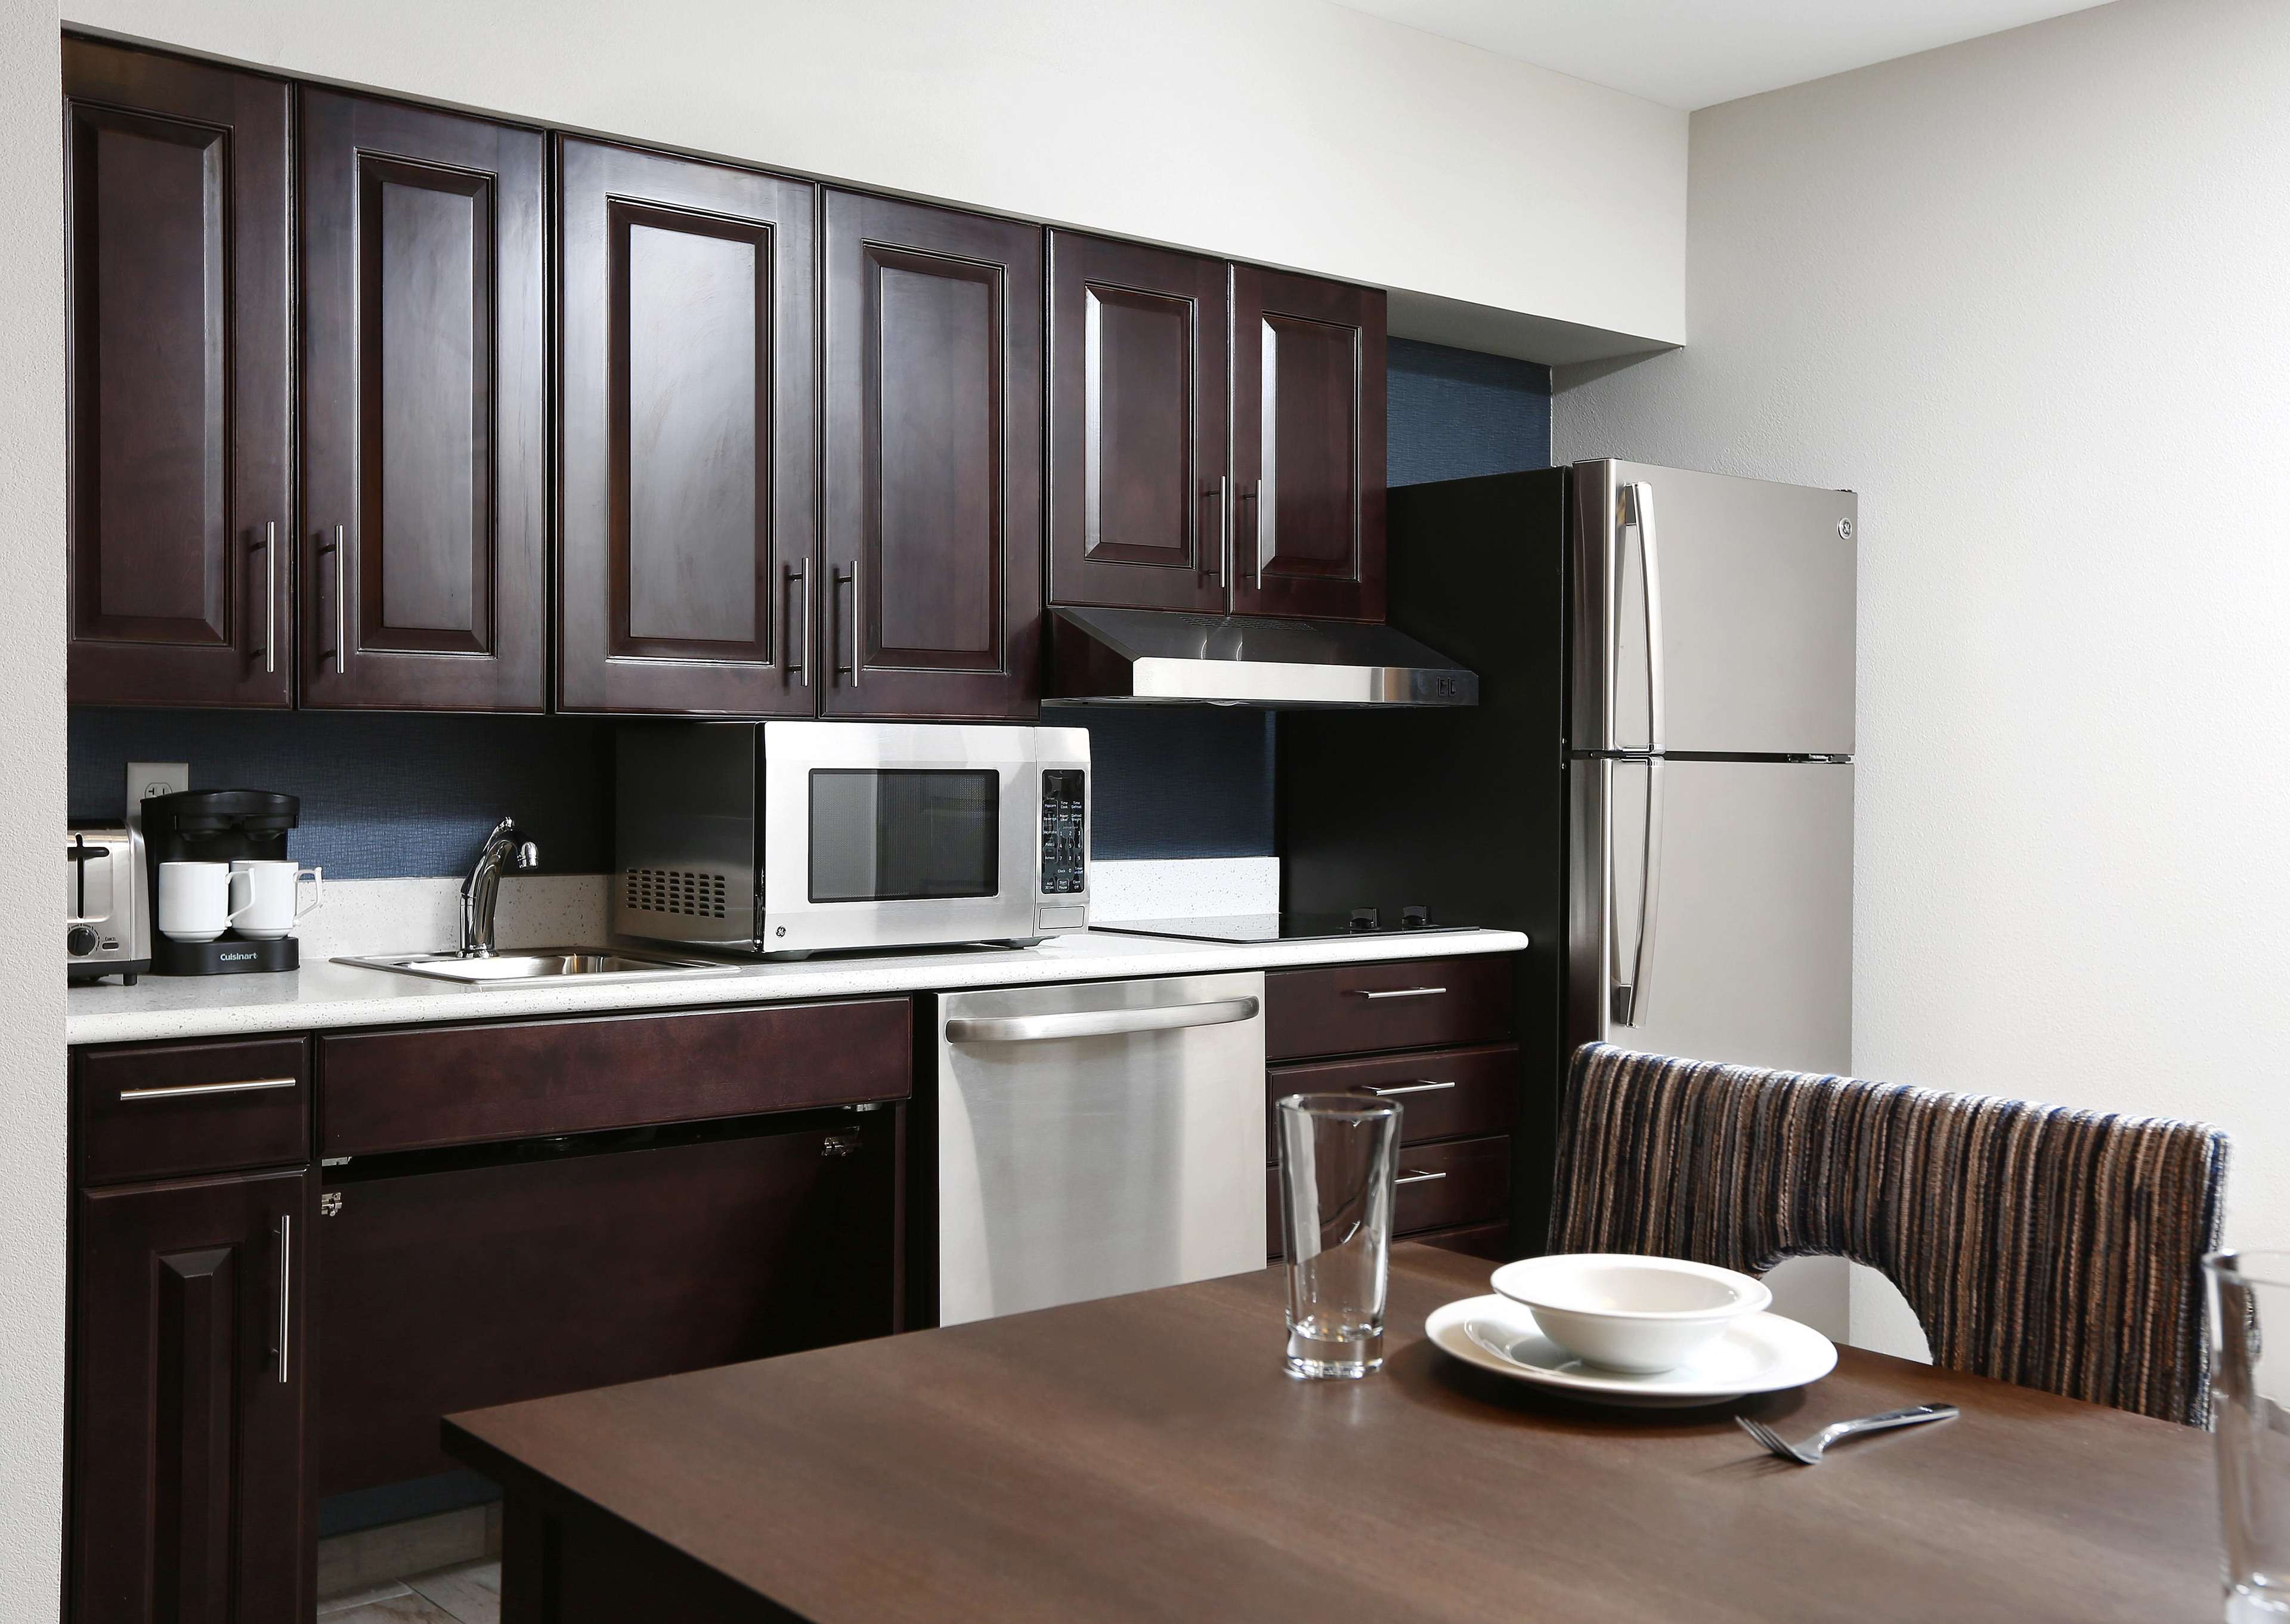 Homewood Suites by Hilton West Fargo Sanford Medical Center Area Photo